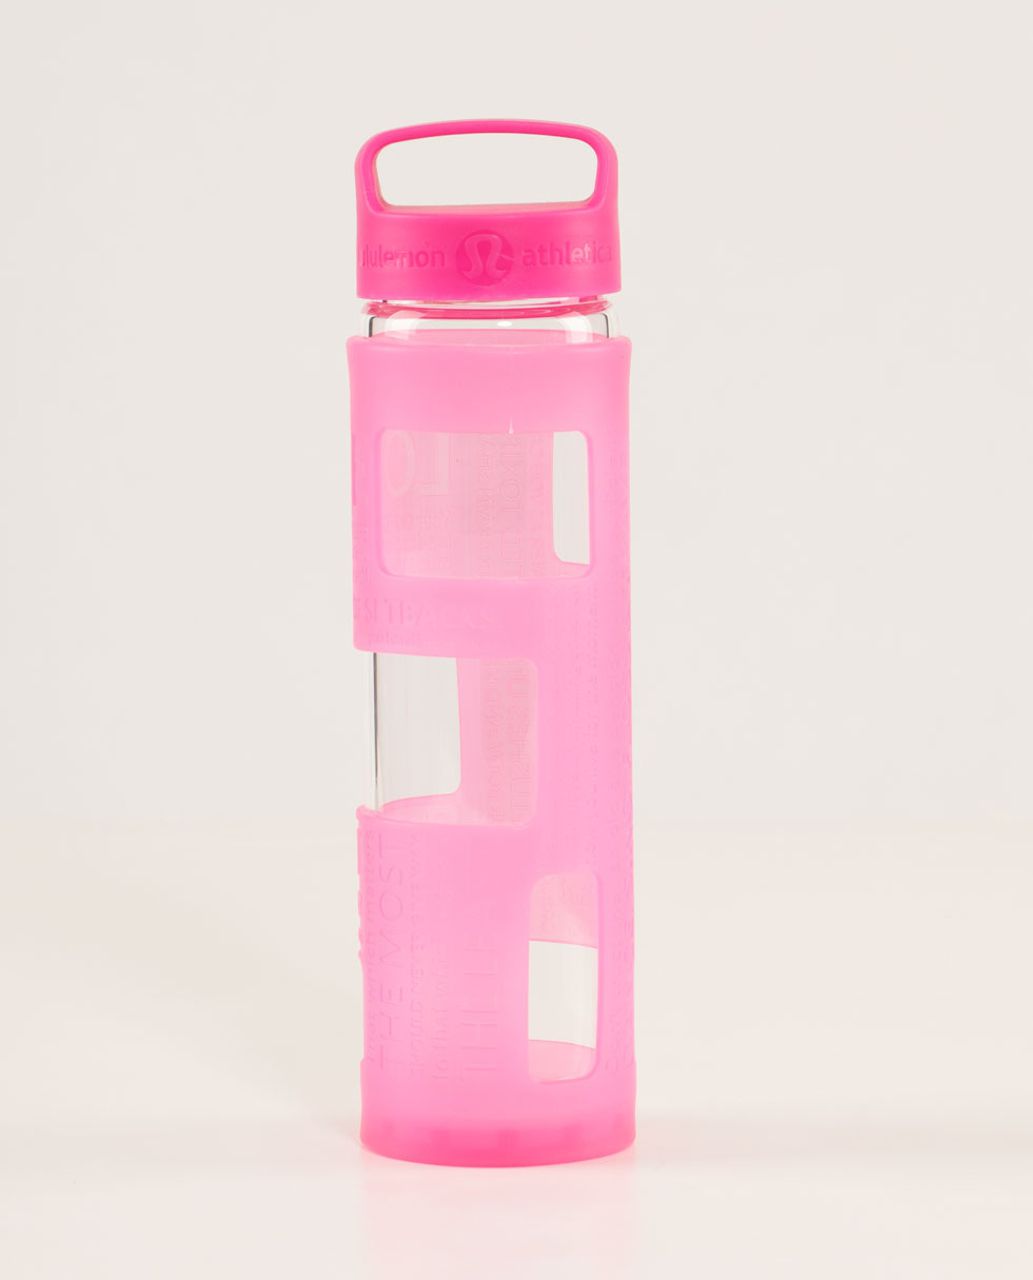 Lululemon Pure Balance Water Bottle - Raspberry Glo Light